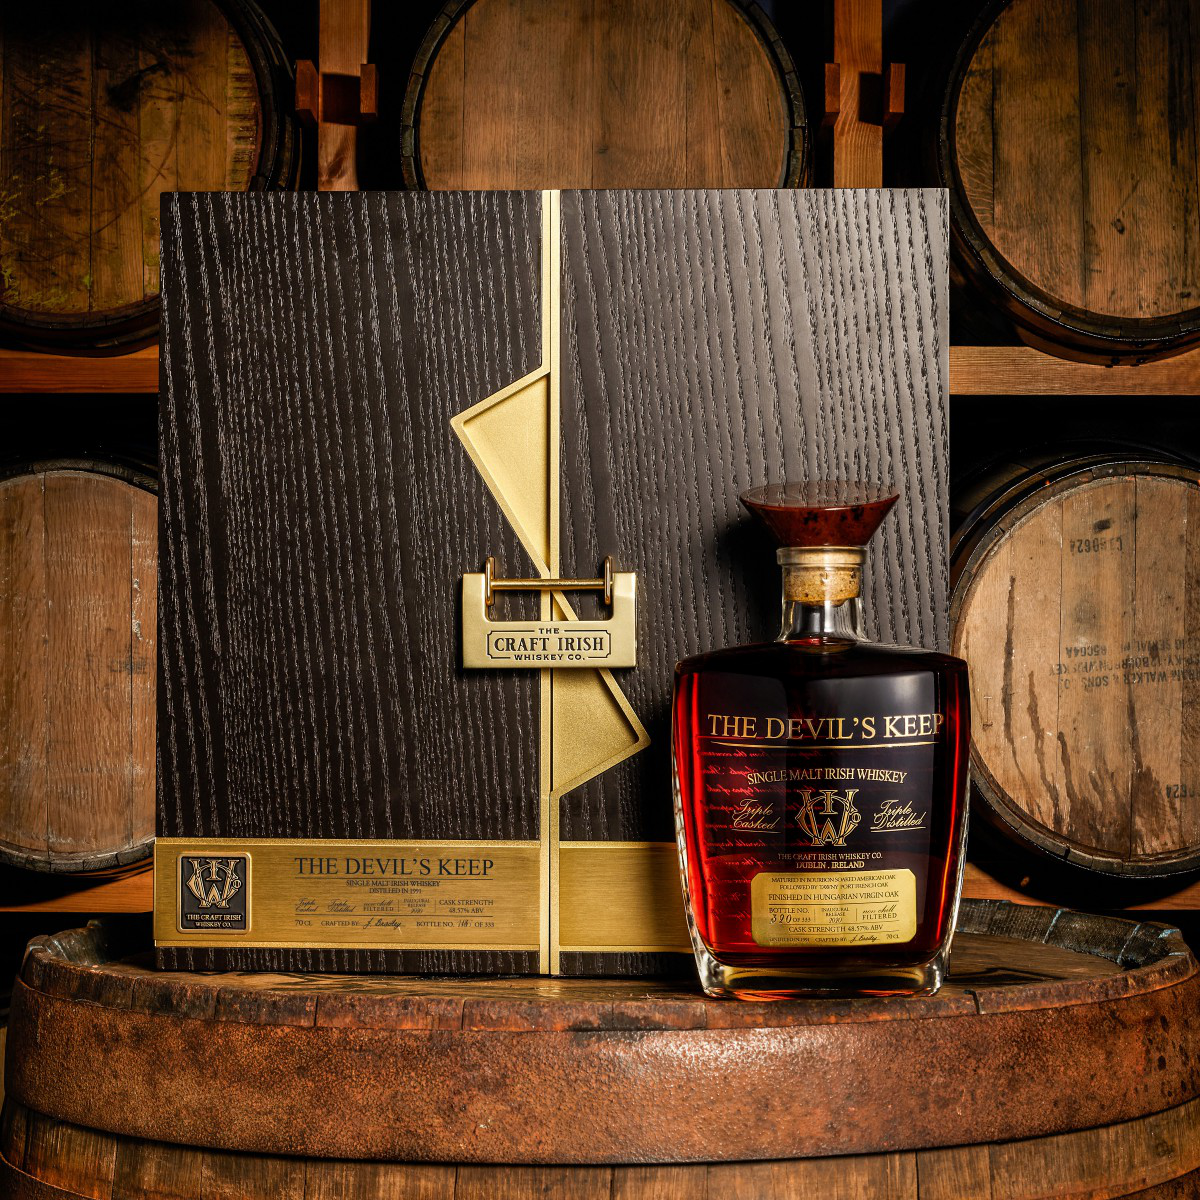 The Devil's Keep Ultra Rare Single Malt Irish Whiskey by Tiago Russo Golden Packaging Design Award Winner 2021 